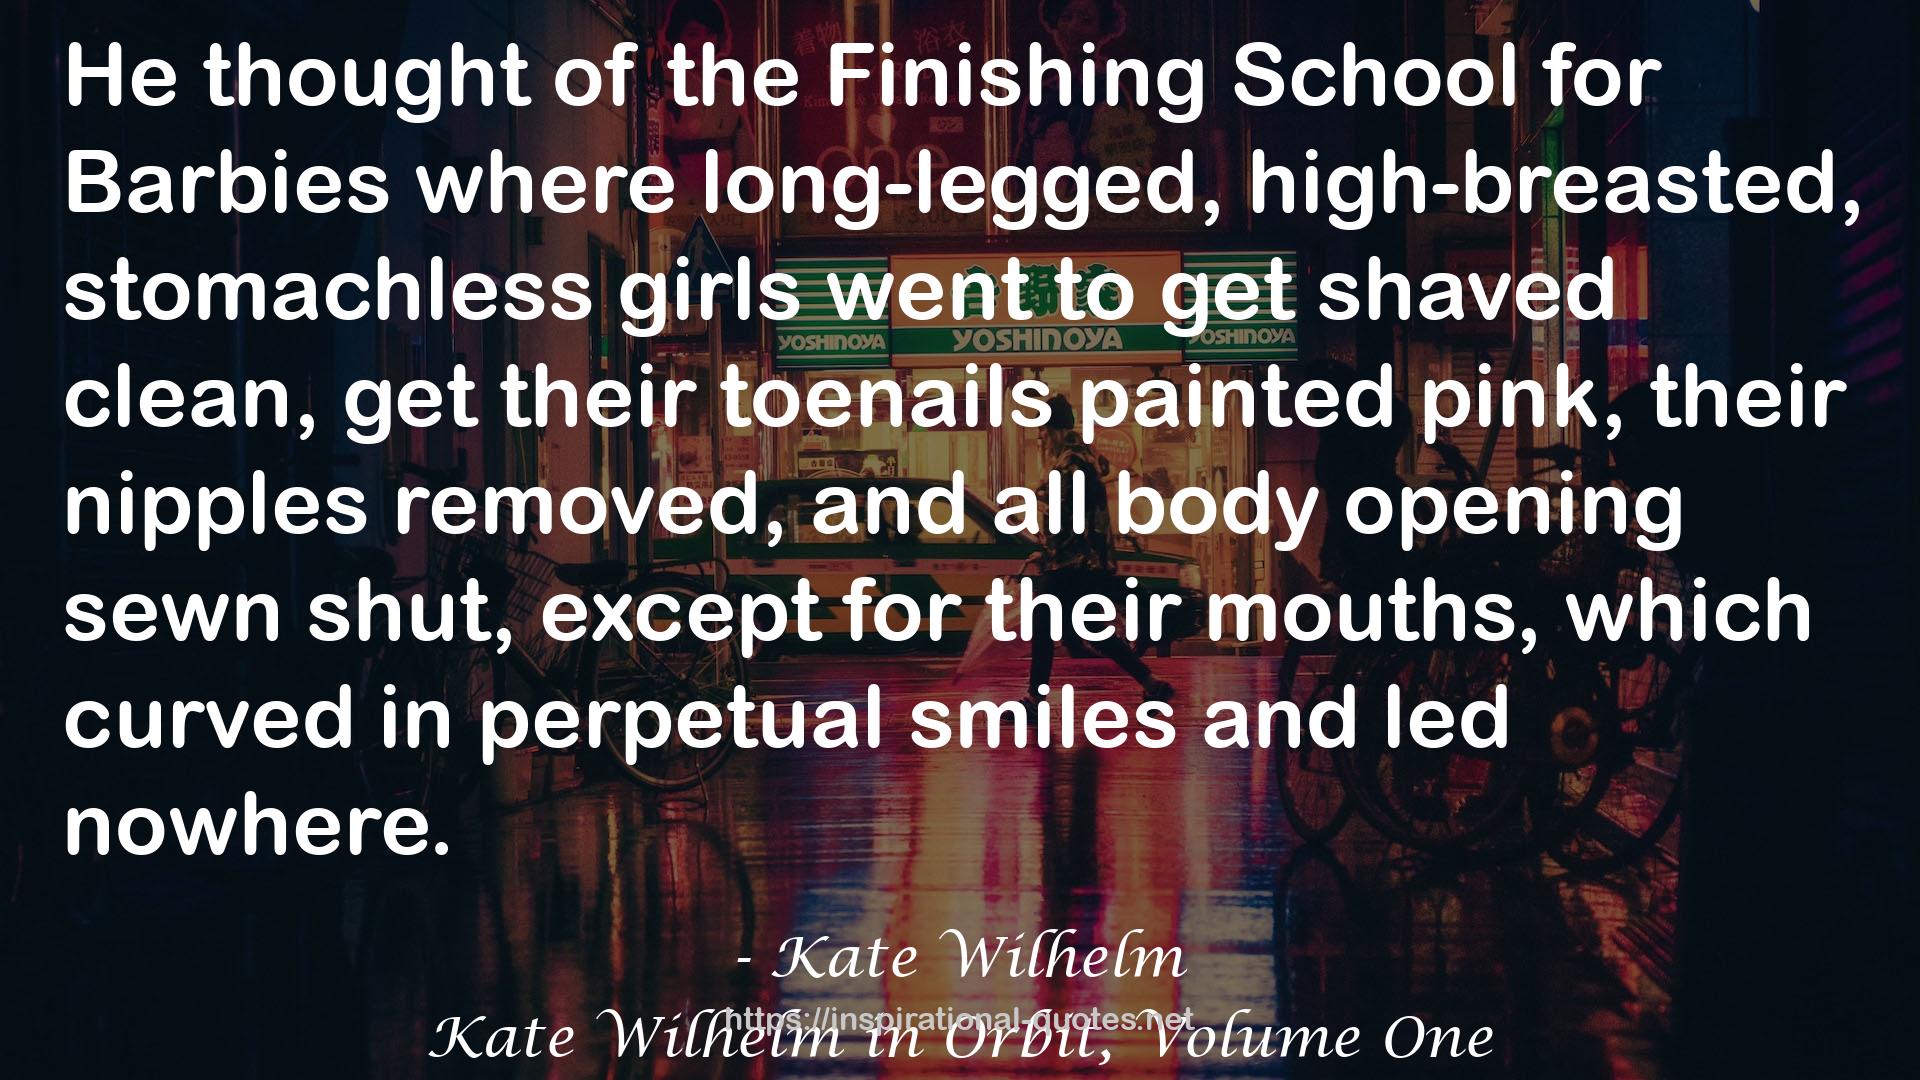 Kate Wilhelm in Orbit, Volume One QUOTES